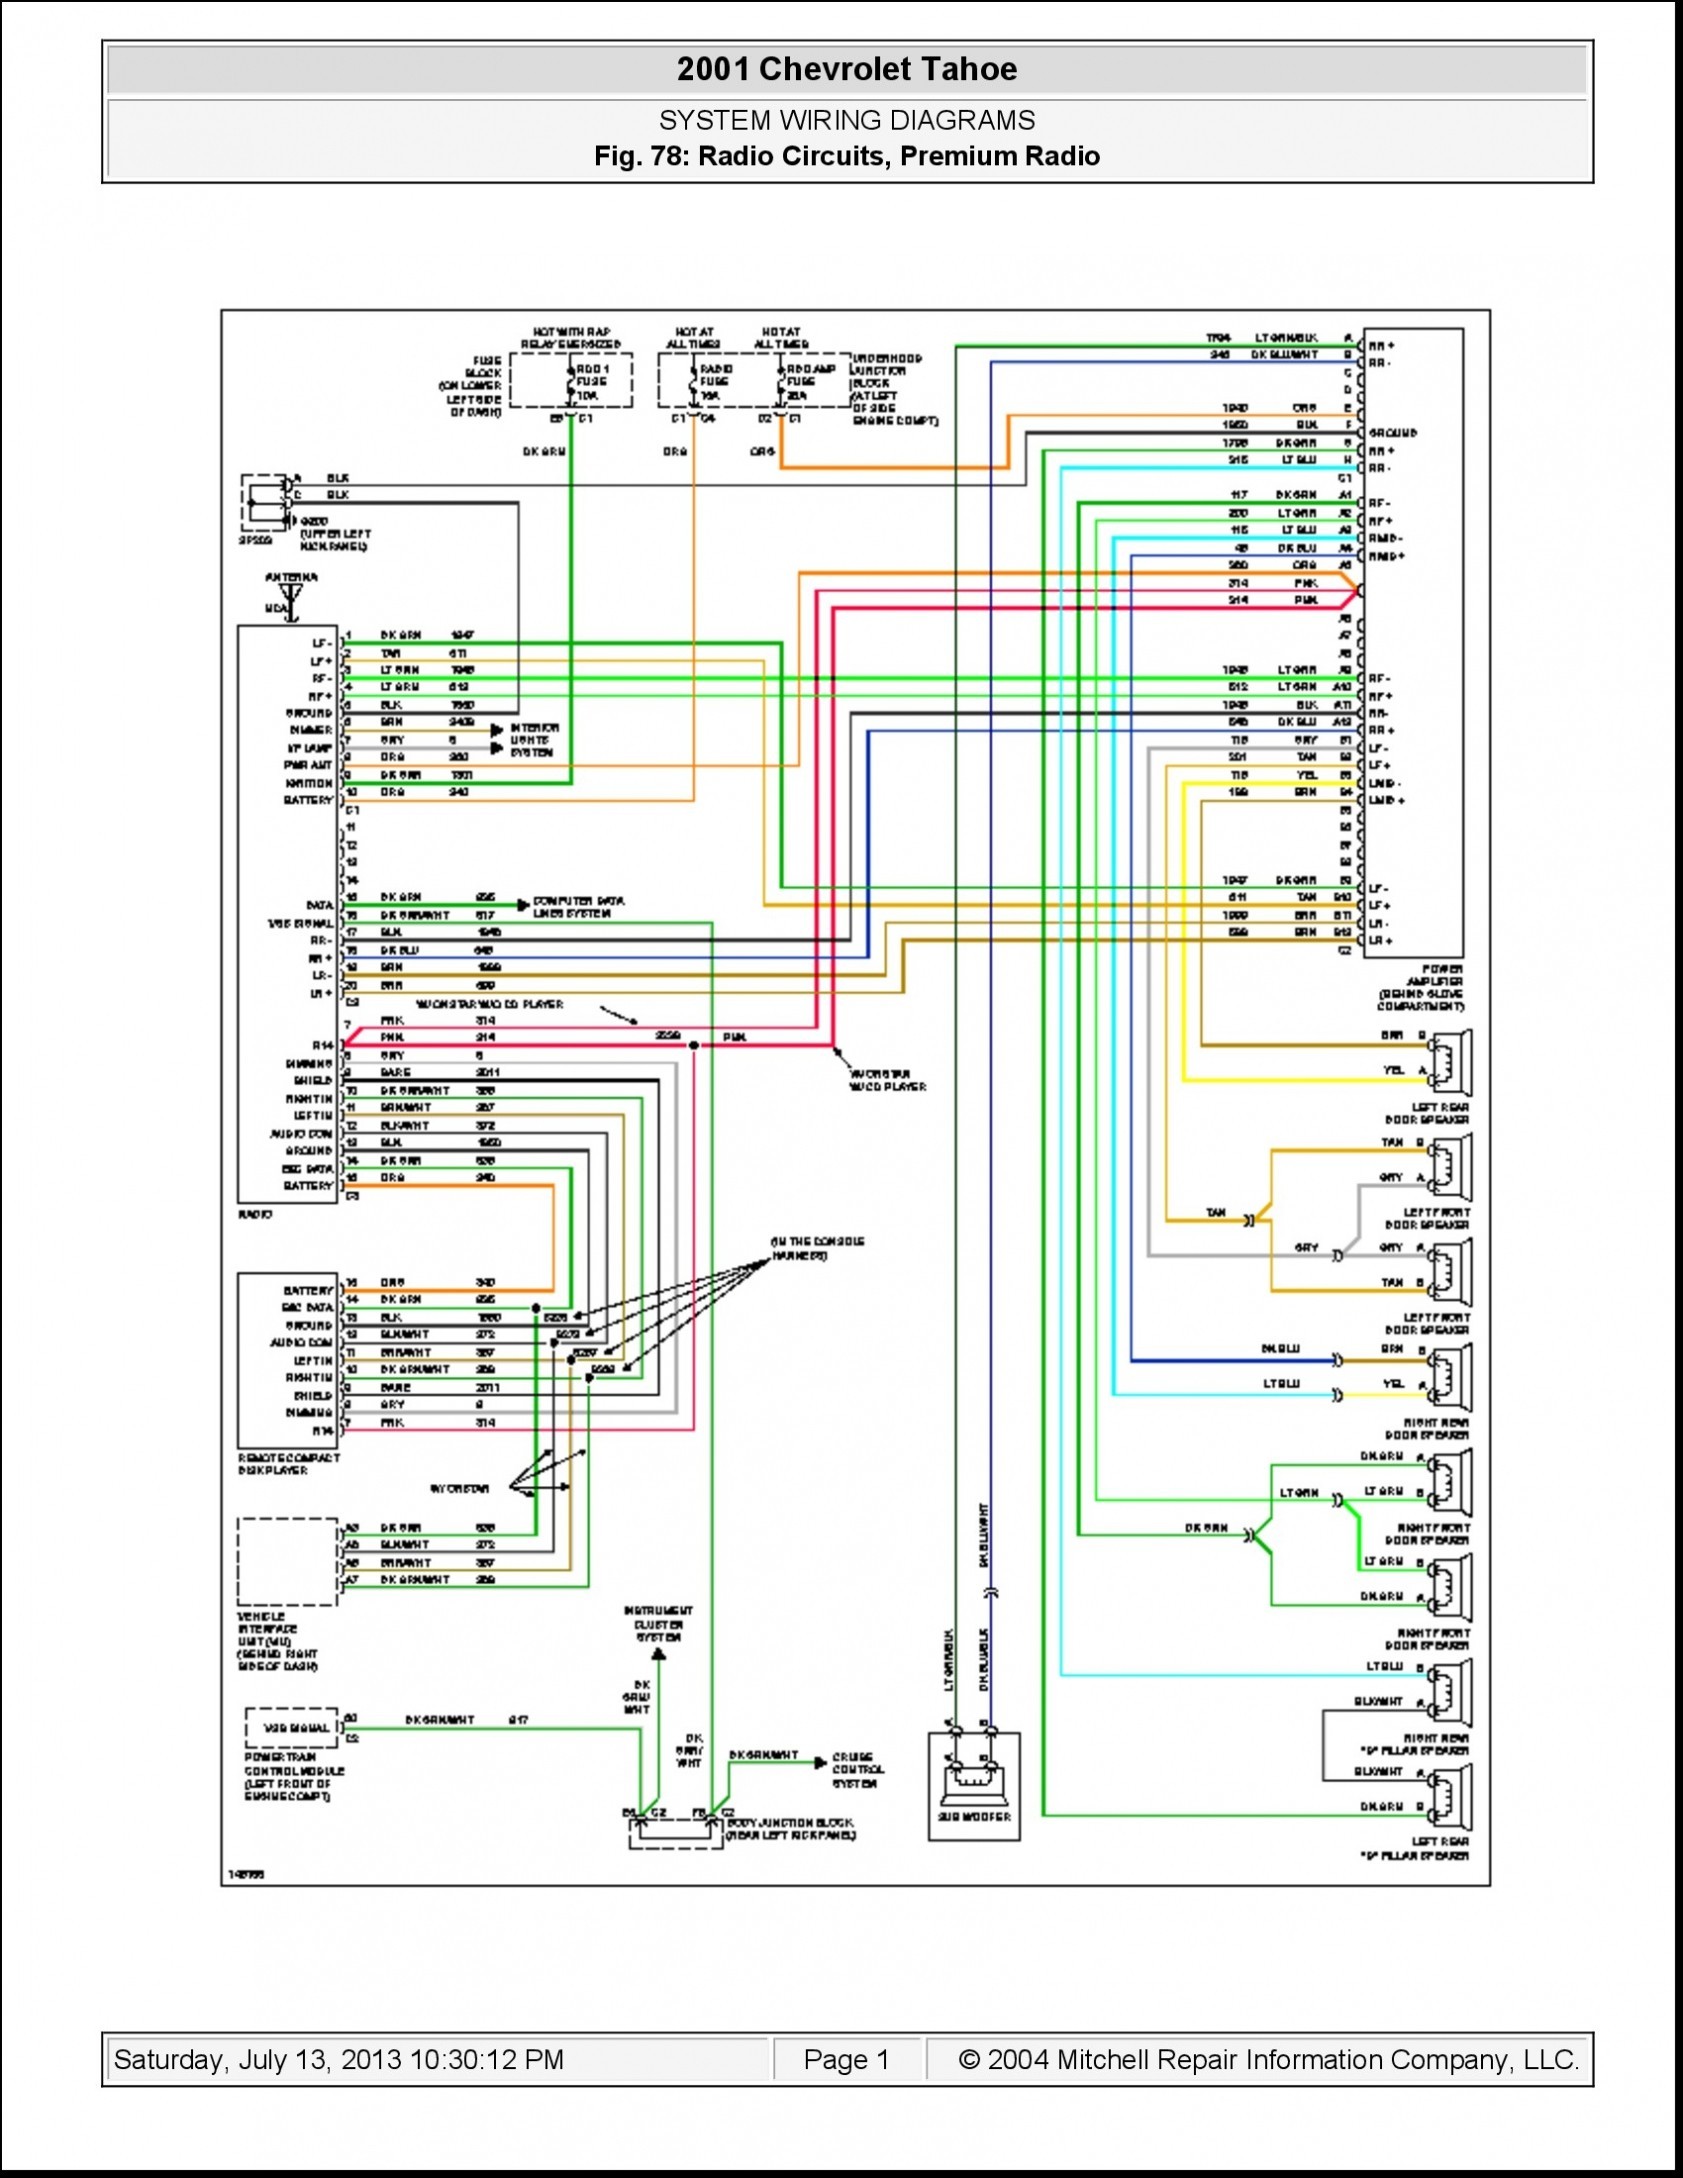 Car Audio Wiring Diagrams Wiring Diagram Kenwood Valid Car Radio Wiring Diagram – Http Of Car Audio Wiring Diagrams